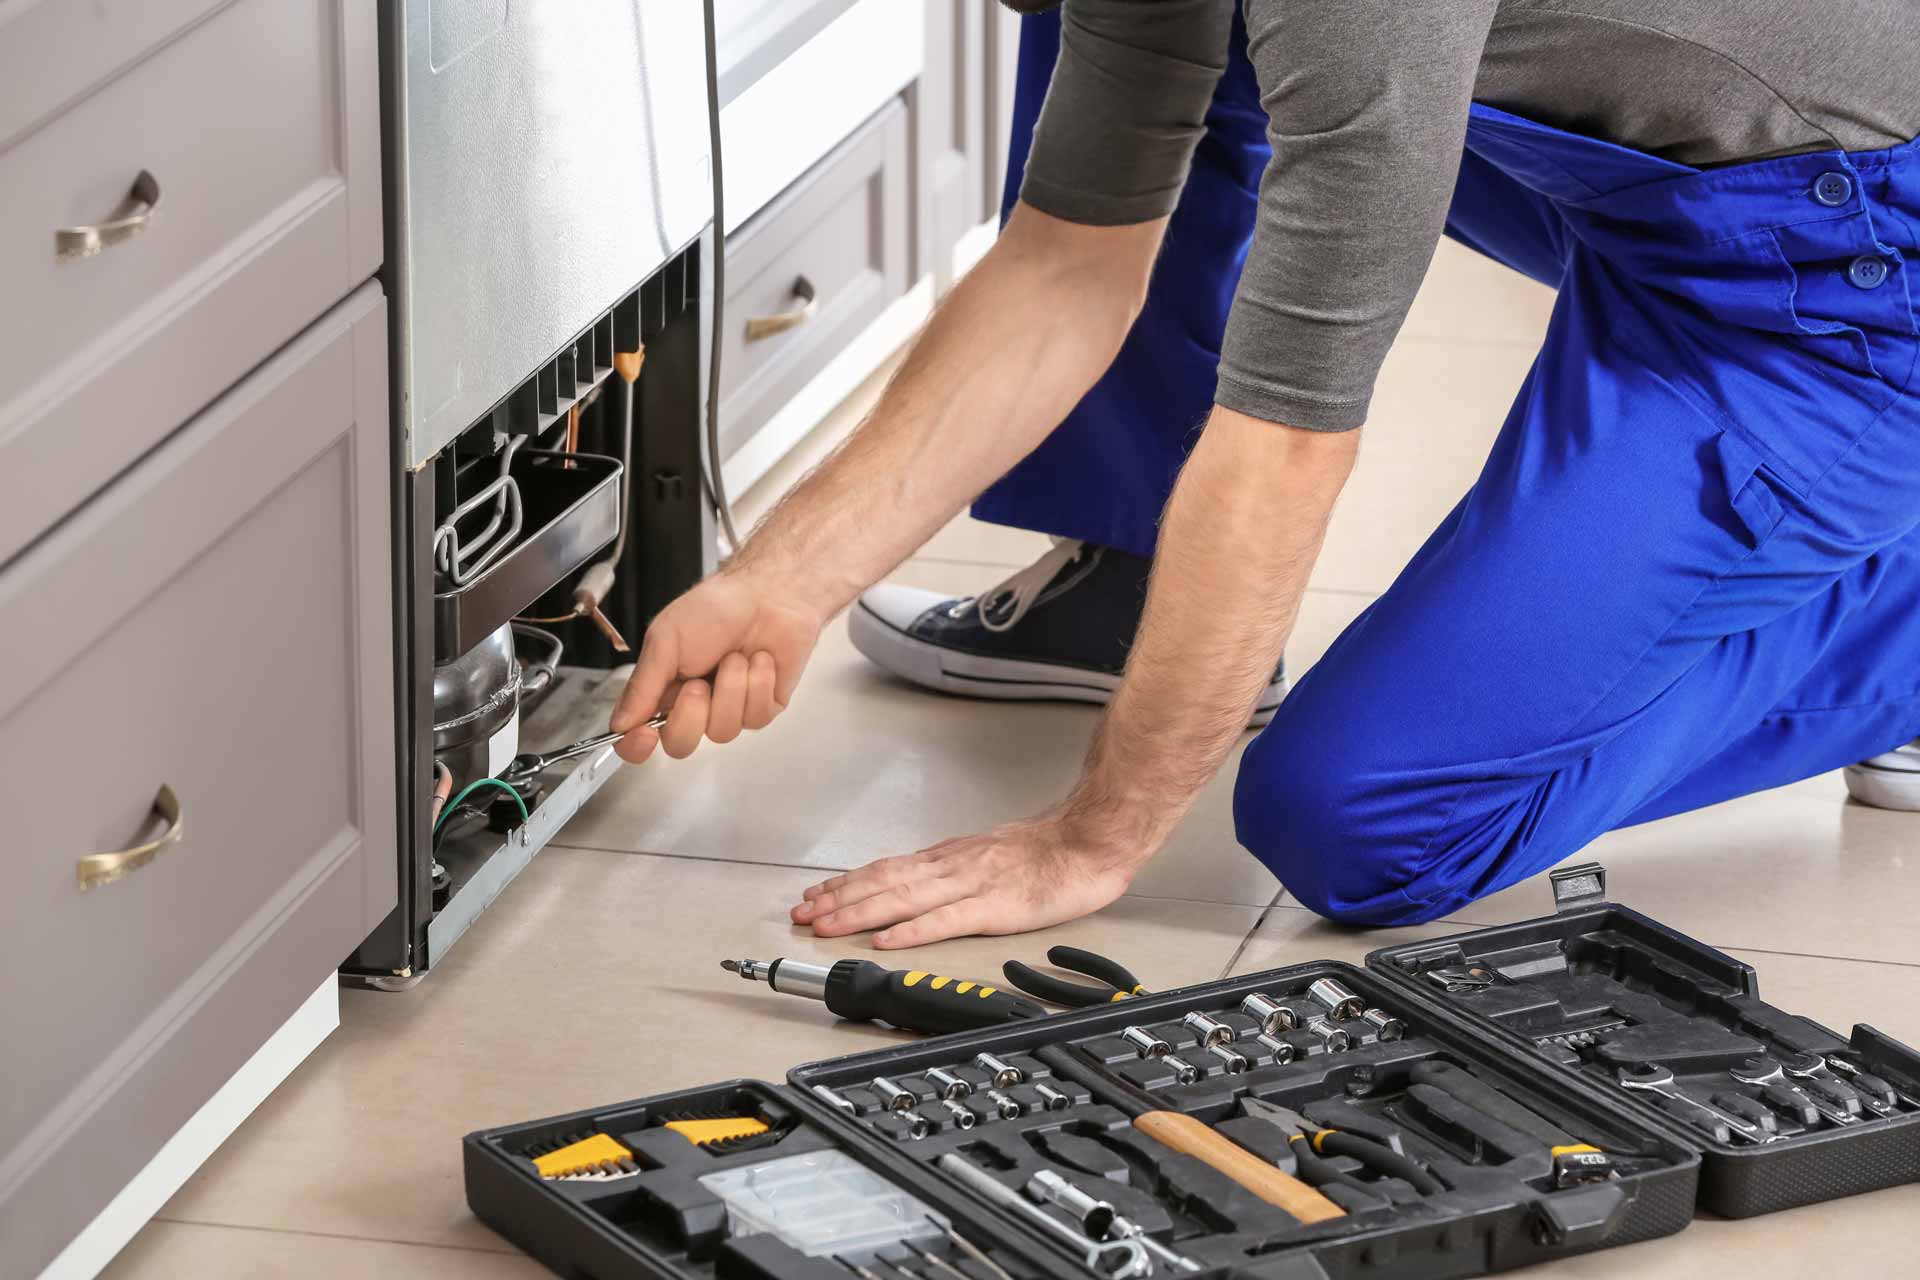 Appliance repair technician kneeling to repair a refrigerator